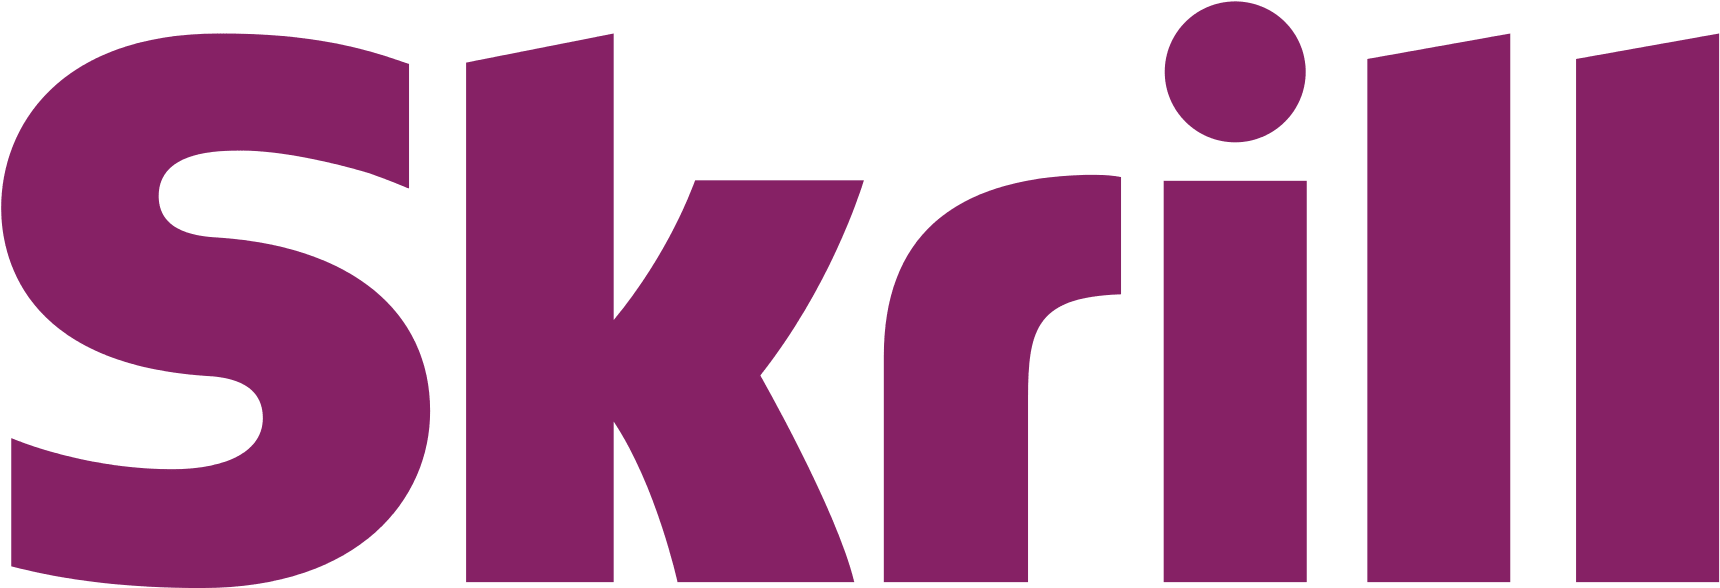 Screenshot Of Skrill's Logo - Skrill Payments (2000x871)